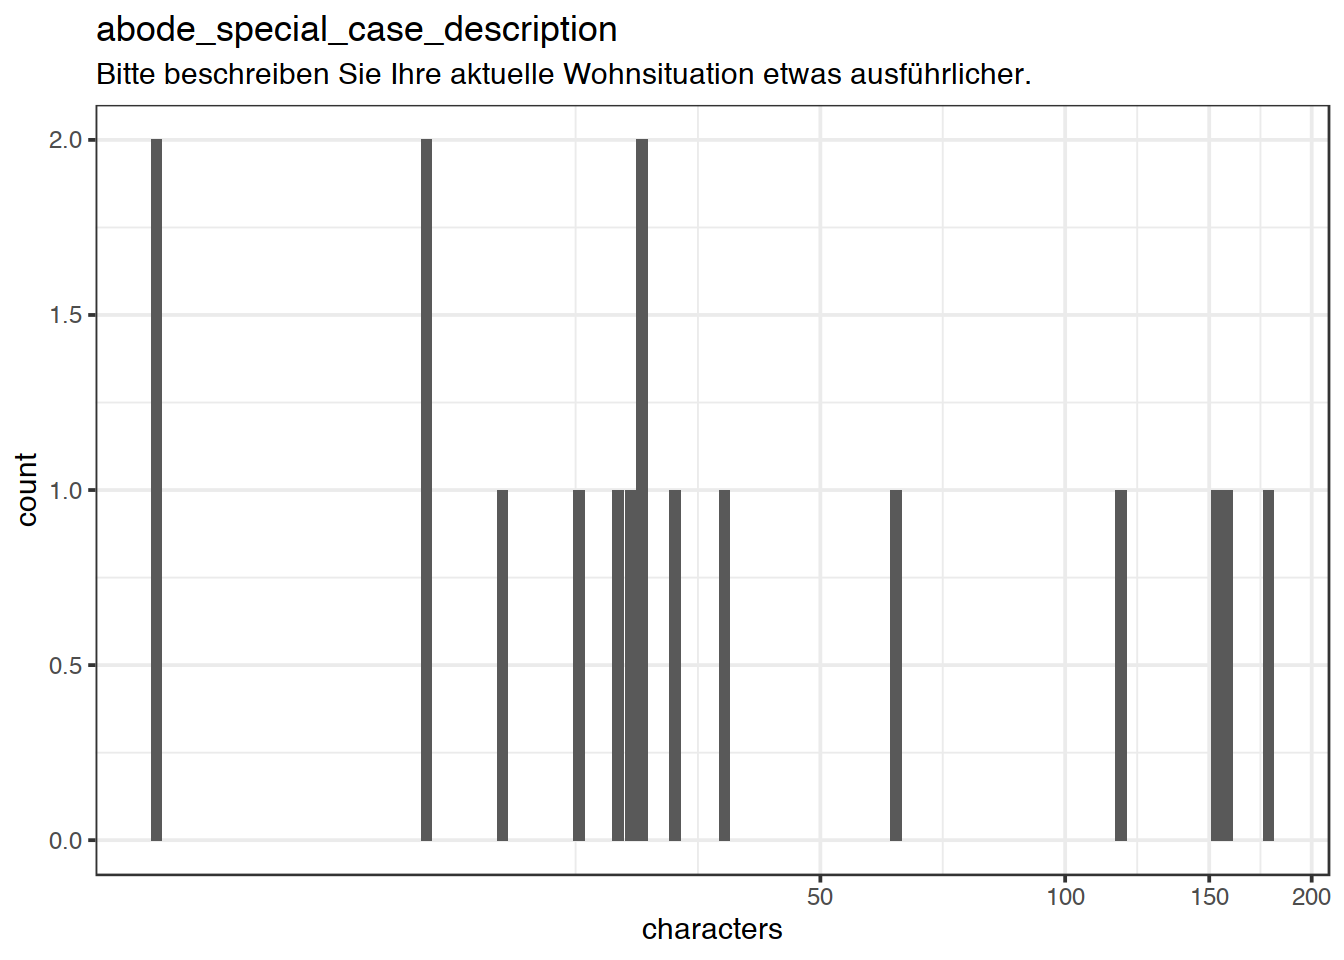 Distribution of values for abode_special_case_description